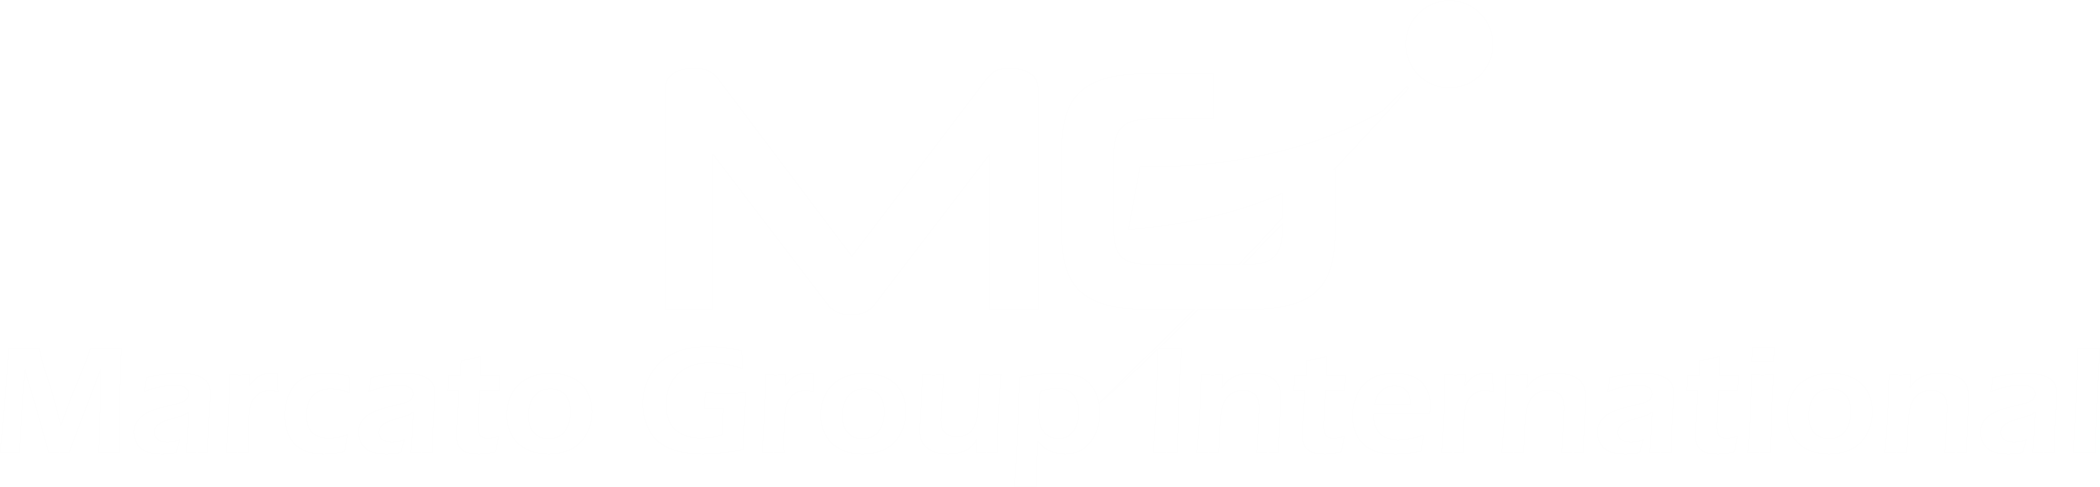 Marcato Group International